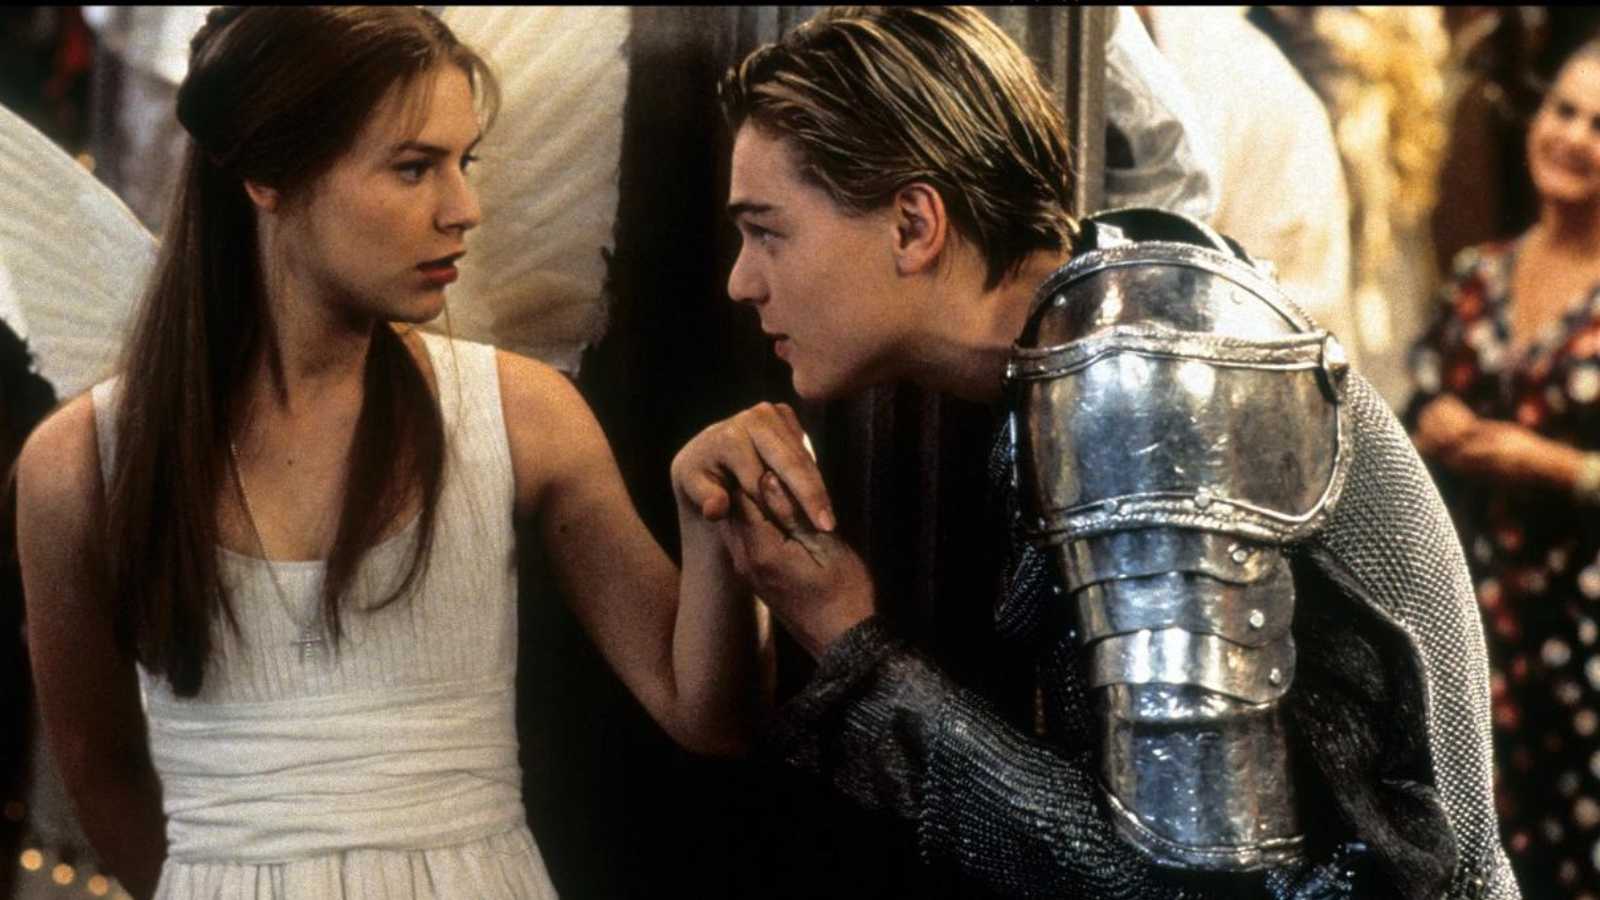 Romeo And Juliet (1996)